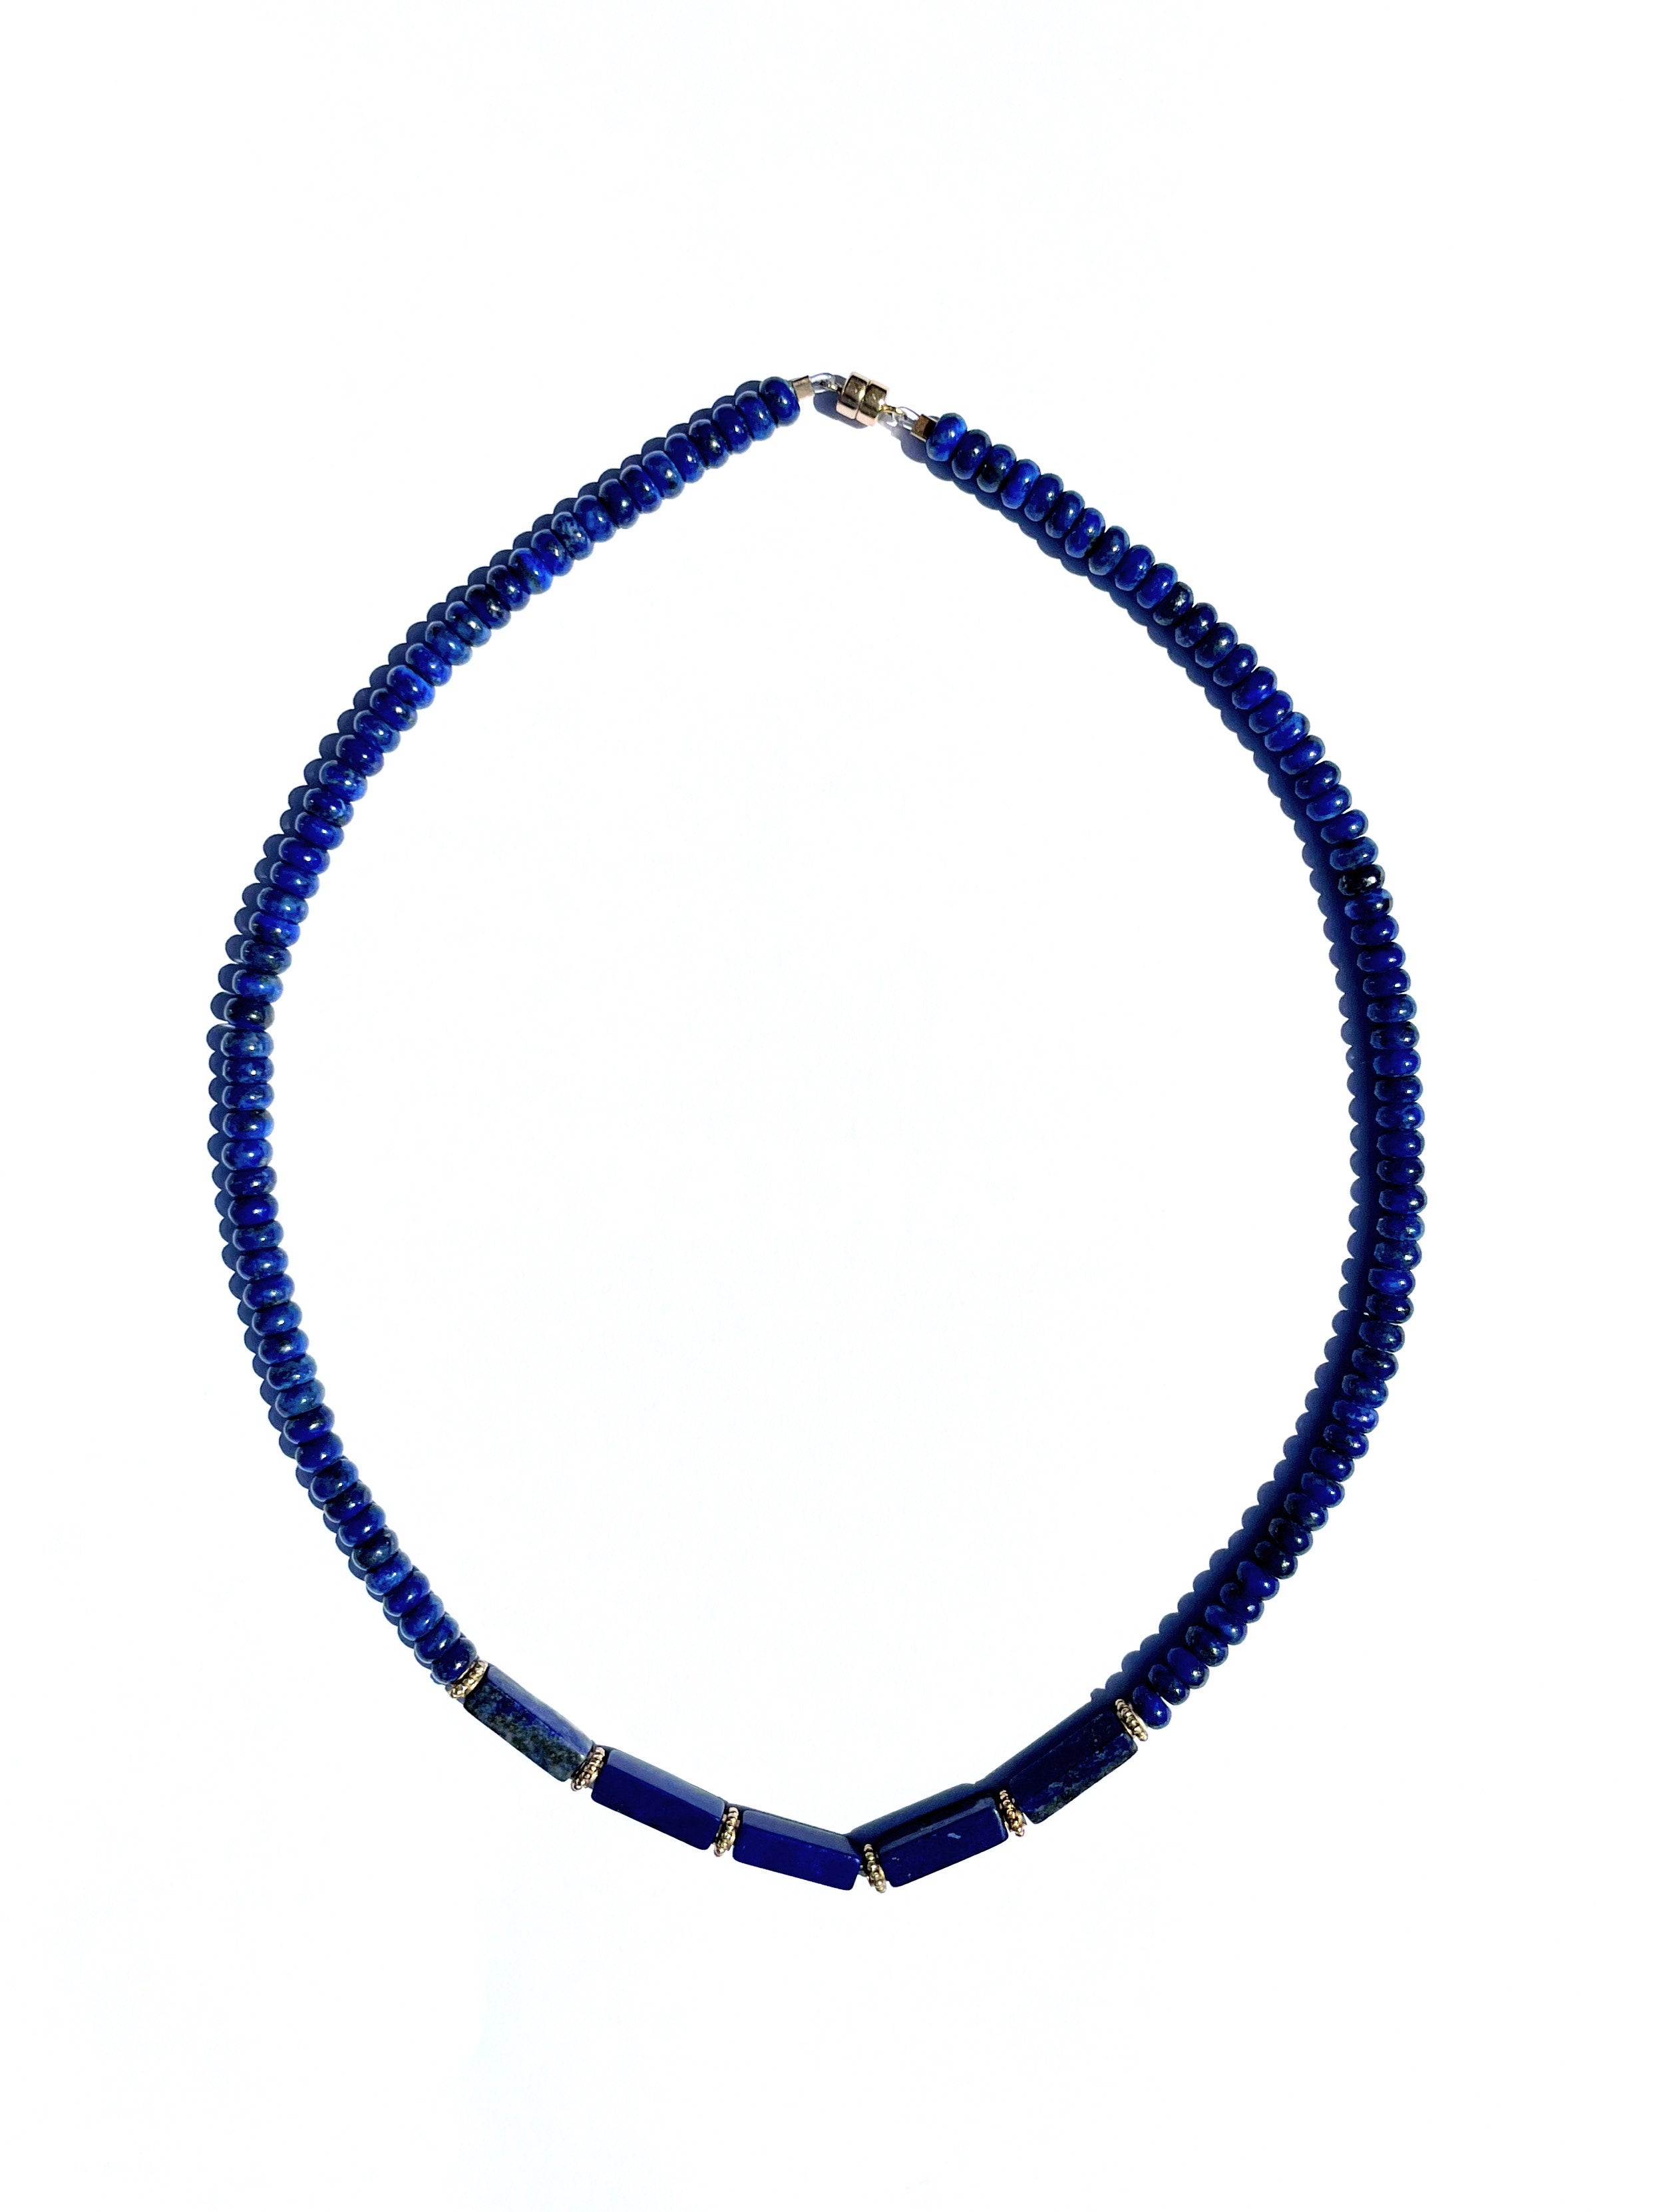 Need You Near Lapis Lazuli Necklace